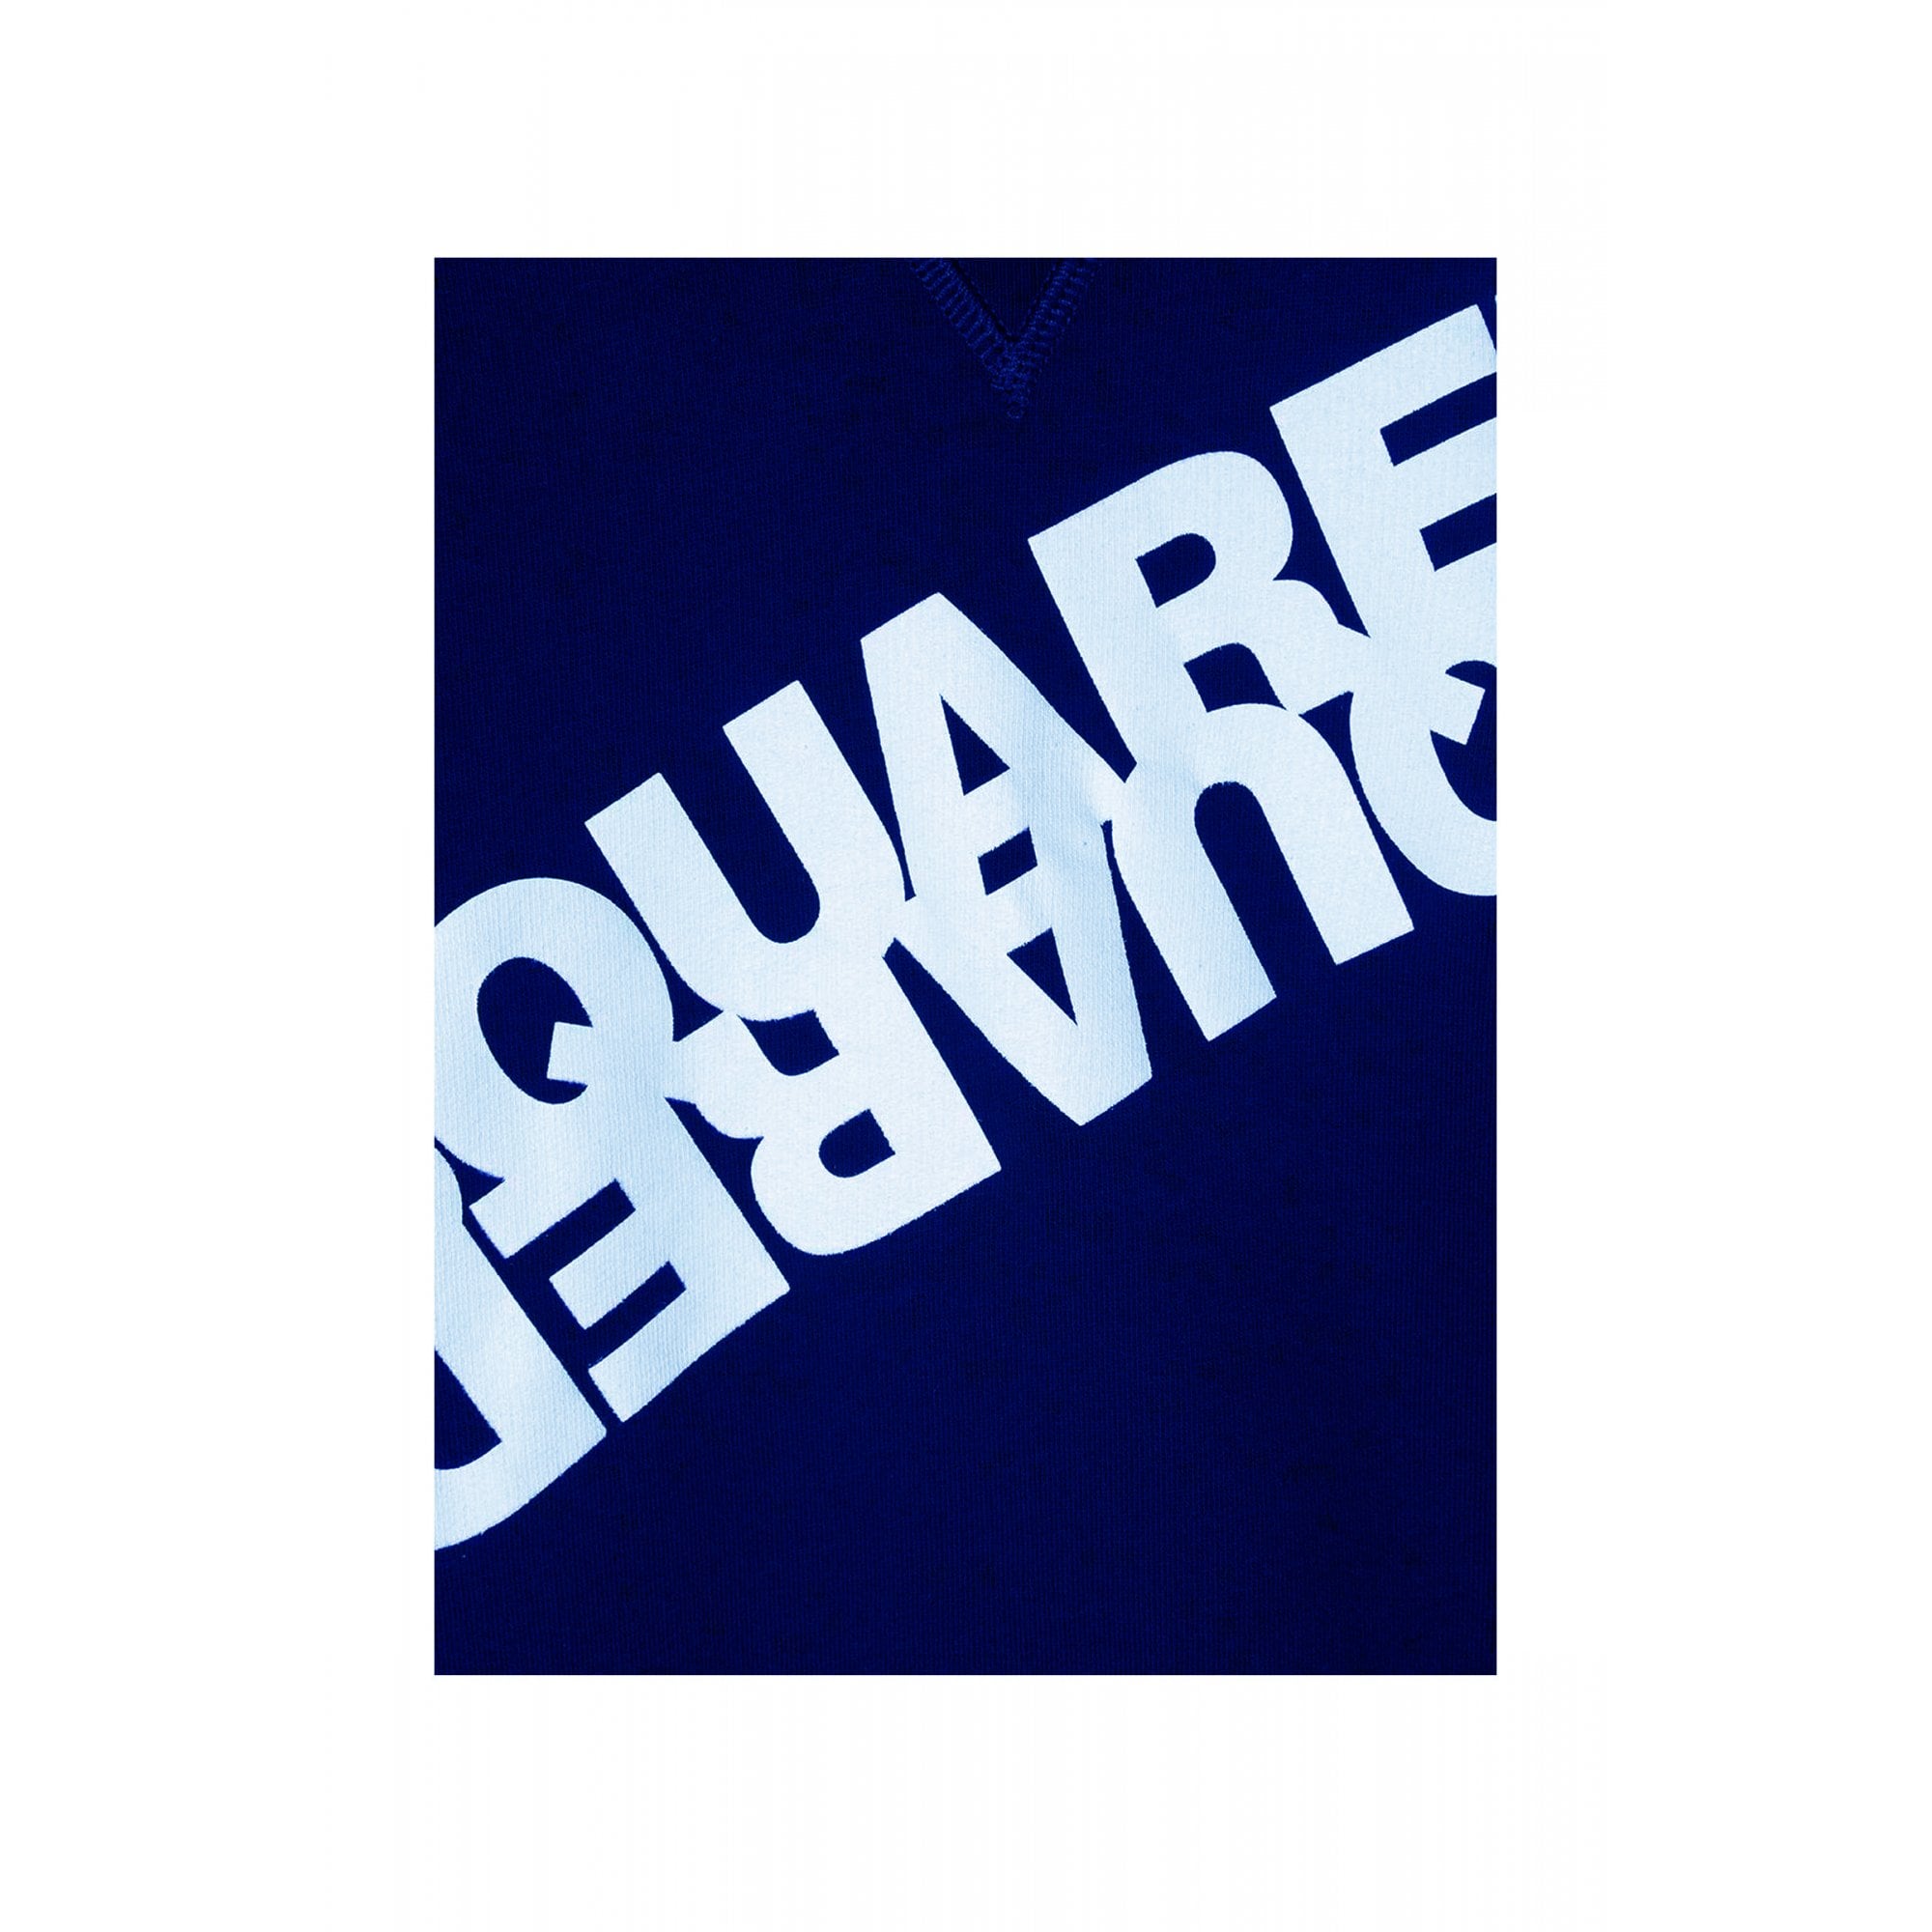 Dsquared2 Boys Mirrored Logo Sweatshirt Blue